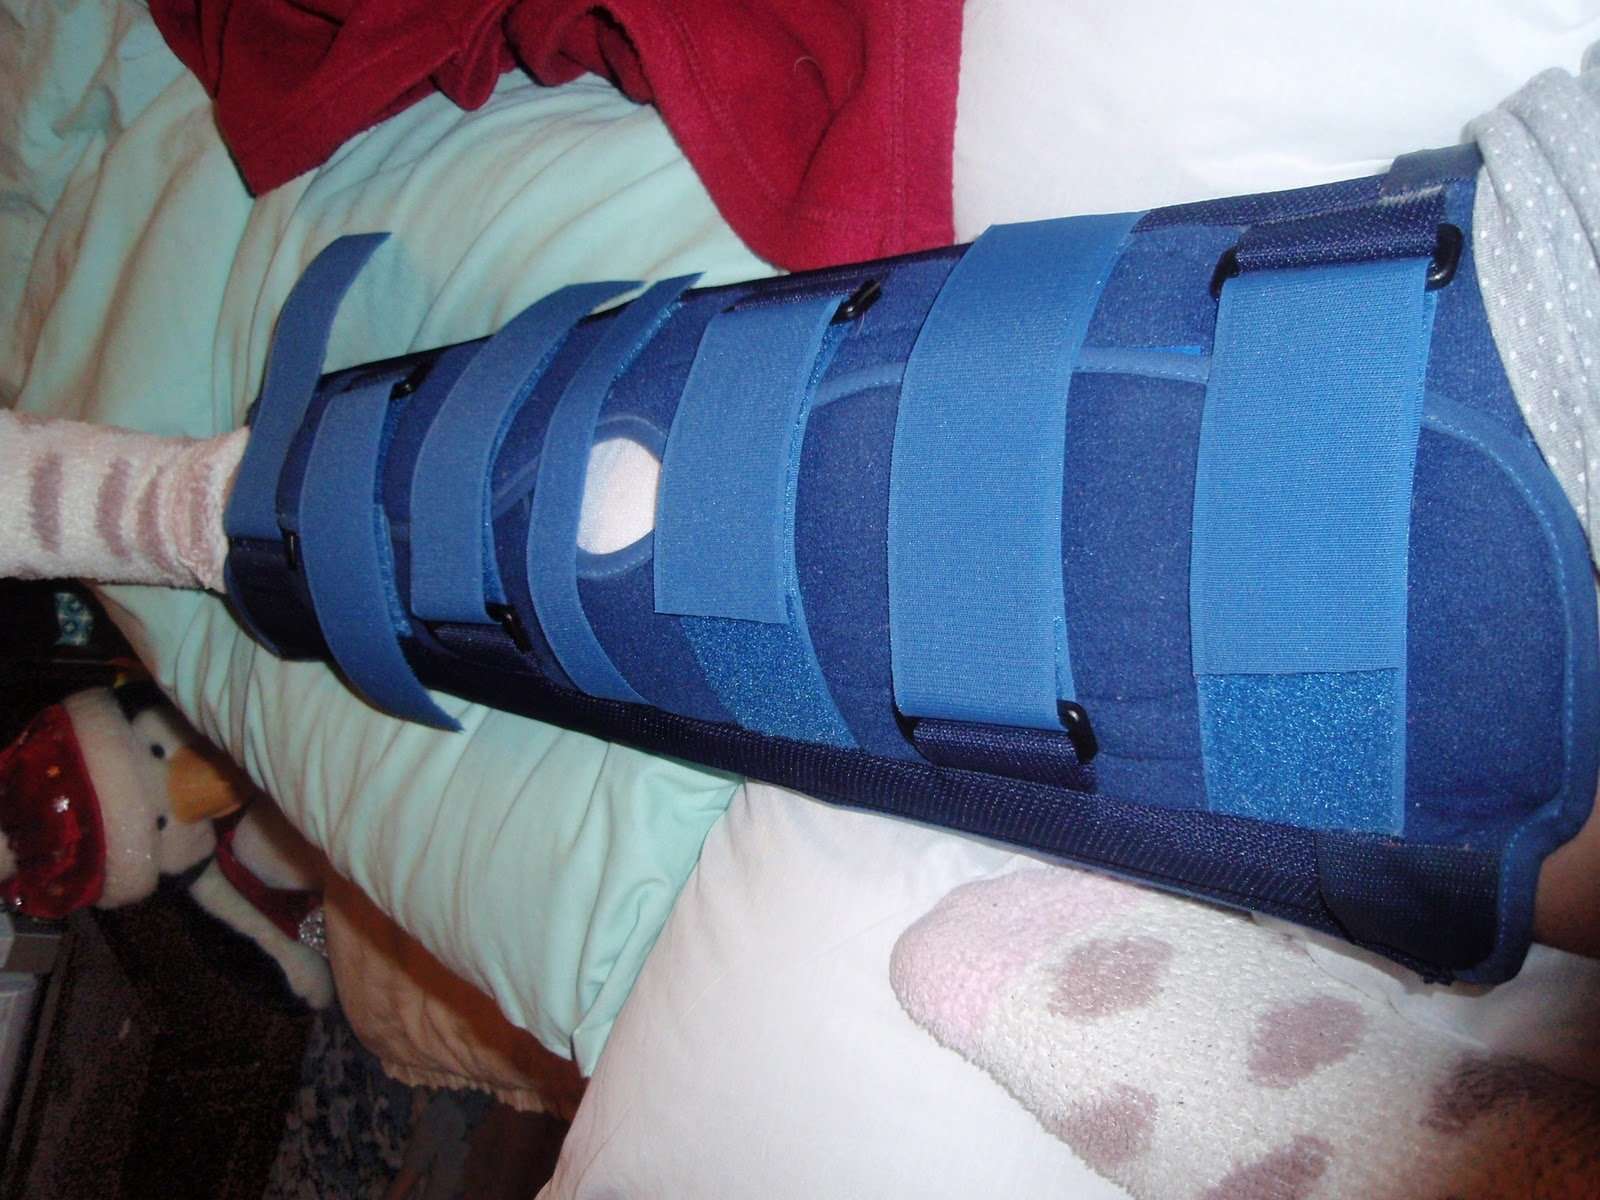 My Broken Knee Story: Getting Around in a Splint